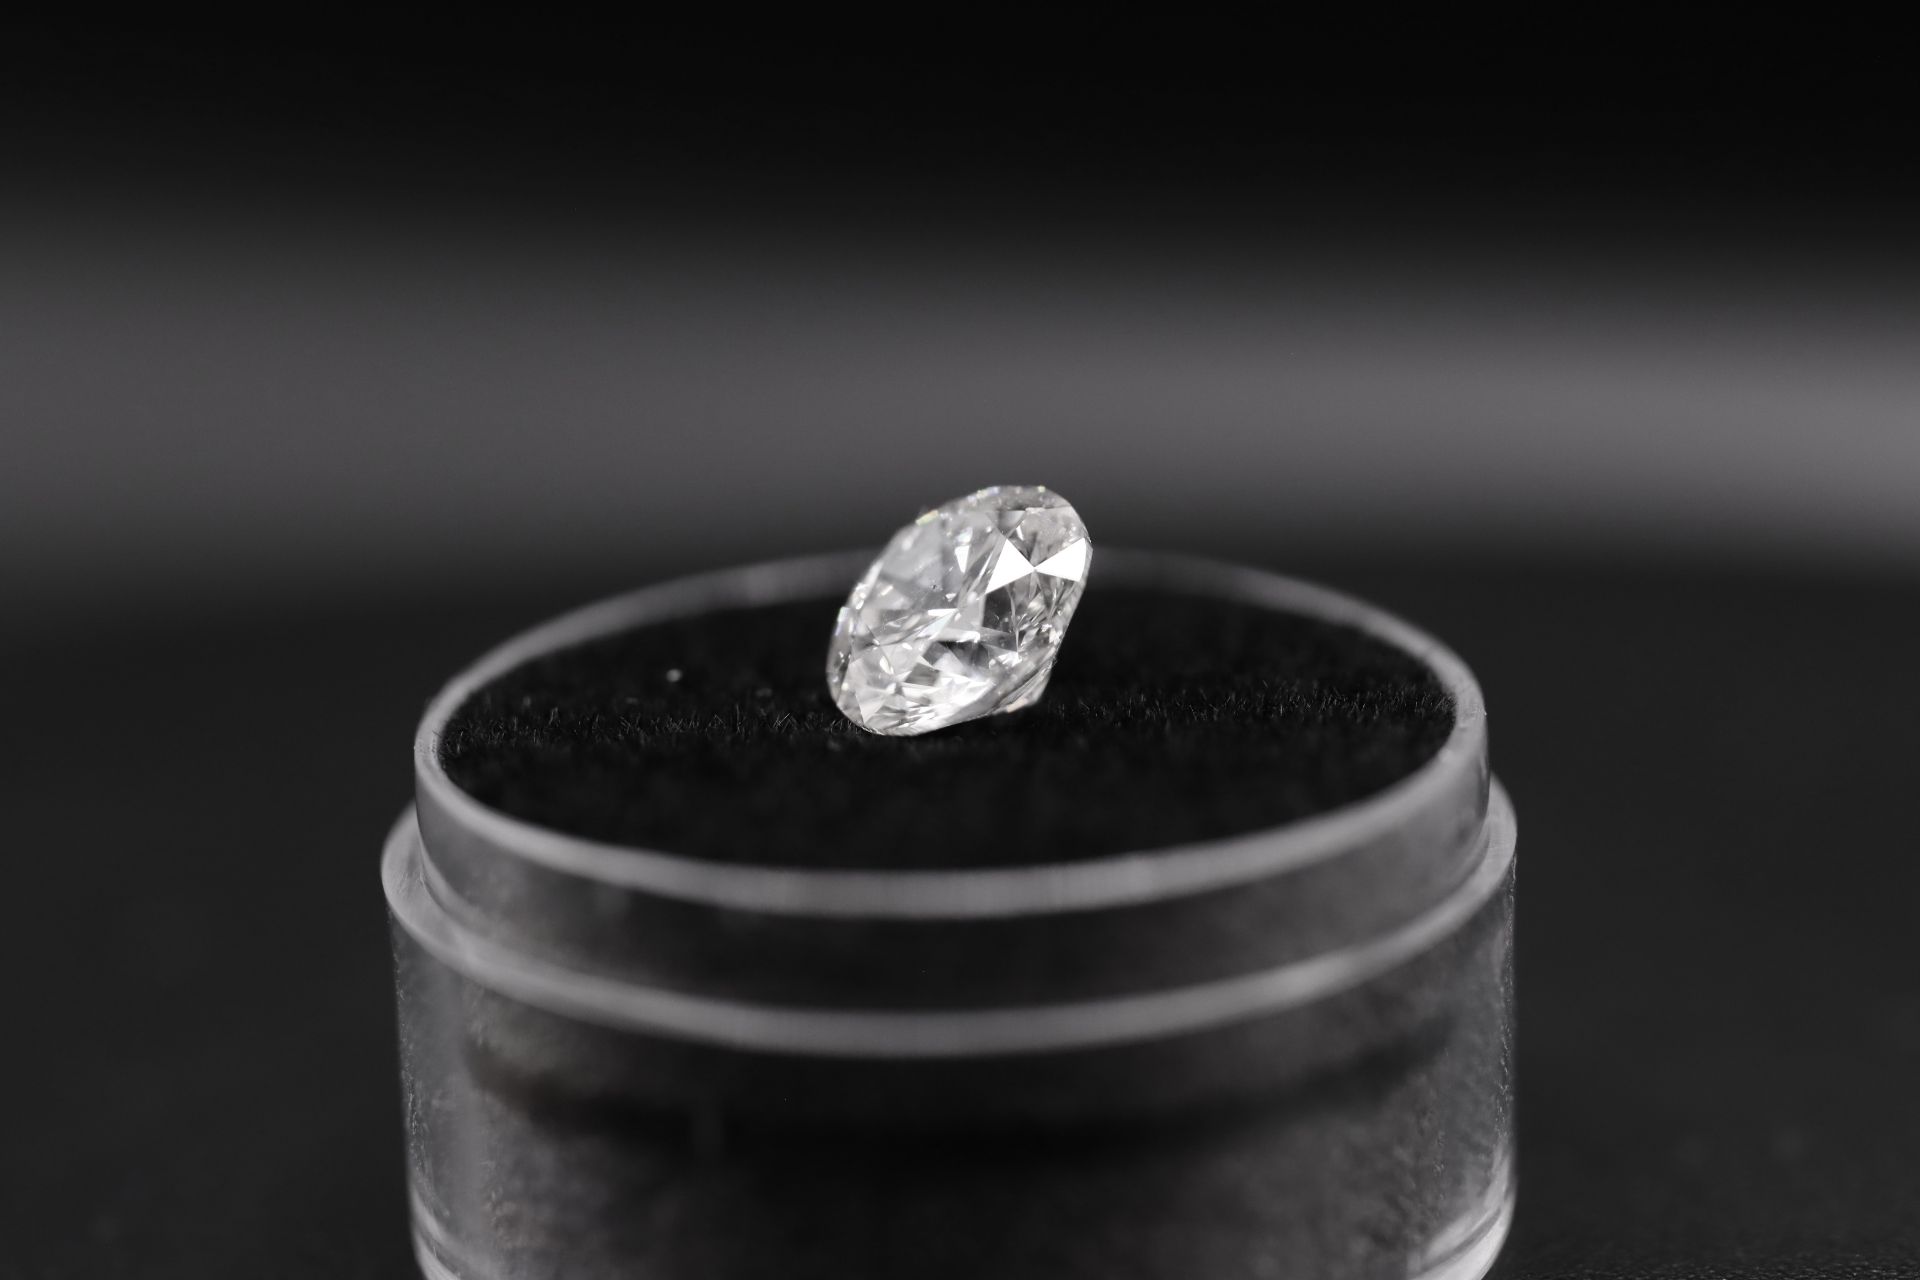 Round Brilliant Cut Natural Diamond 2.01 Carat Colour D Clarity VS1 - DGI Certificate - Image 13 of 24